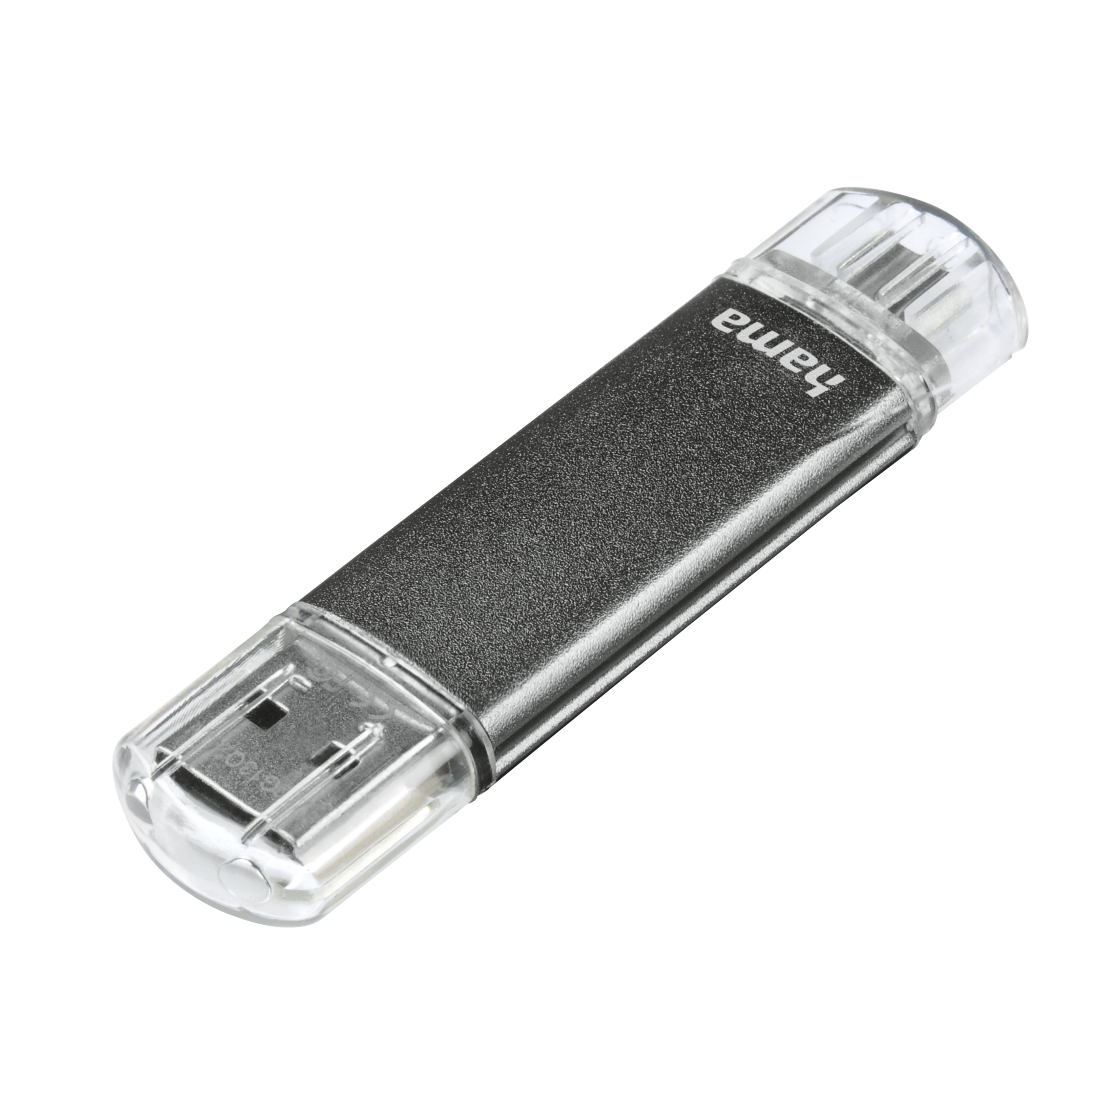 00123925 Hama "Laeta Twin" USB Flash Drive, USB 2.0, 32 GB, 10 MB/s, grey